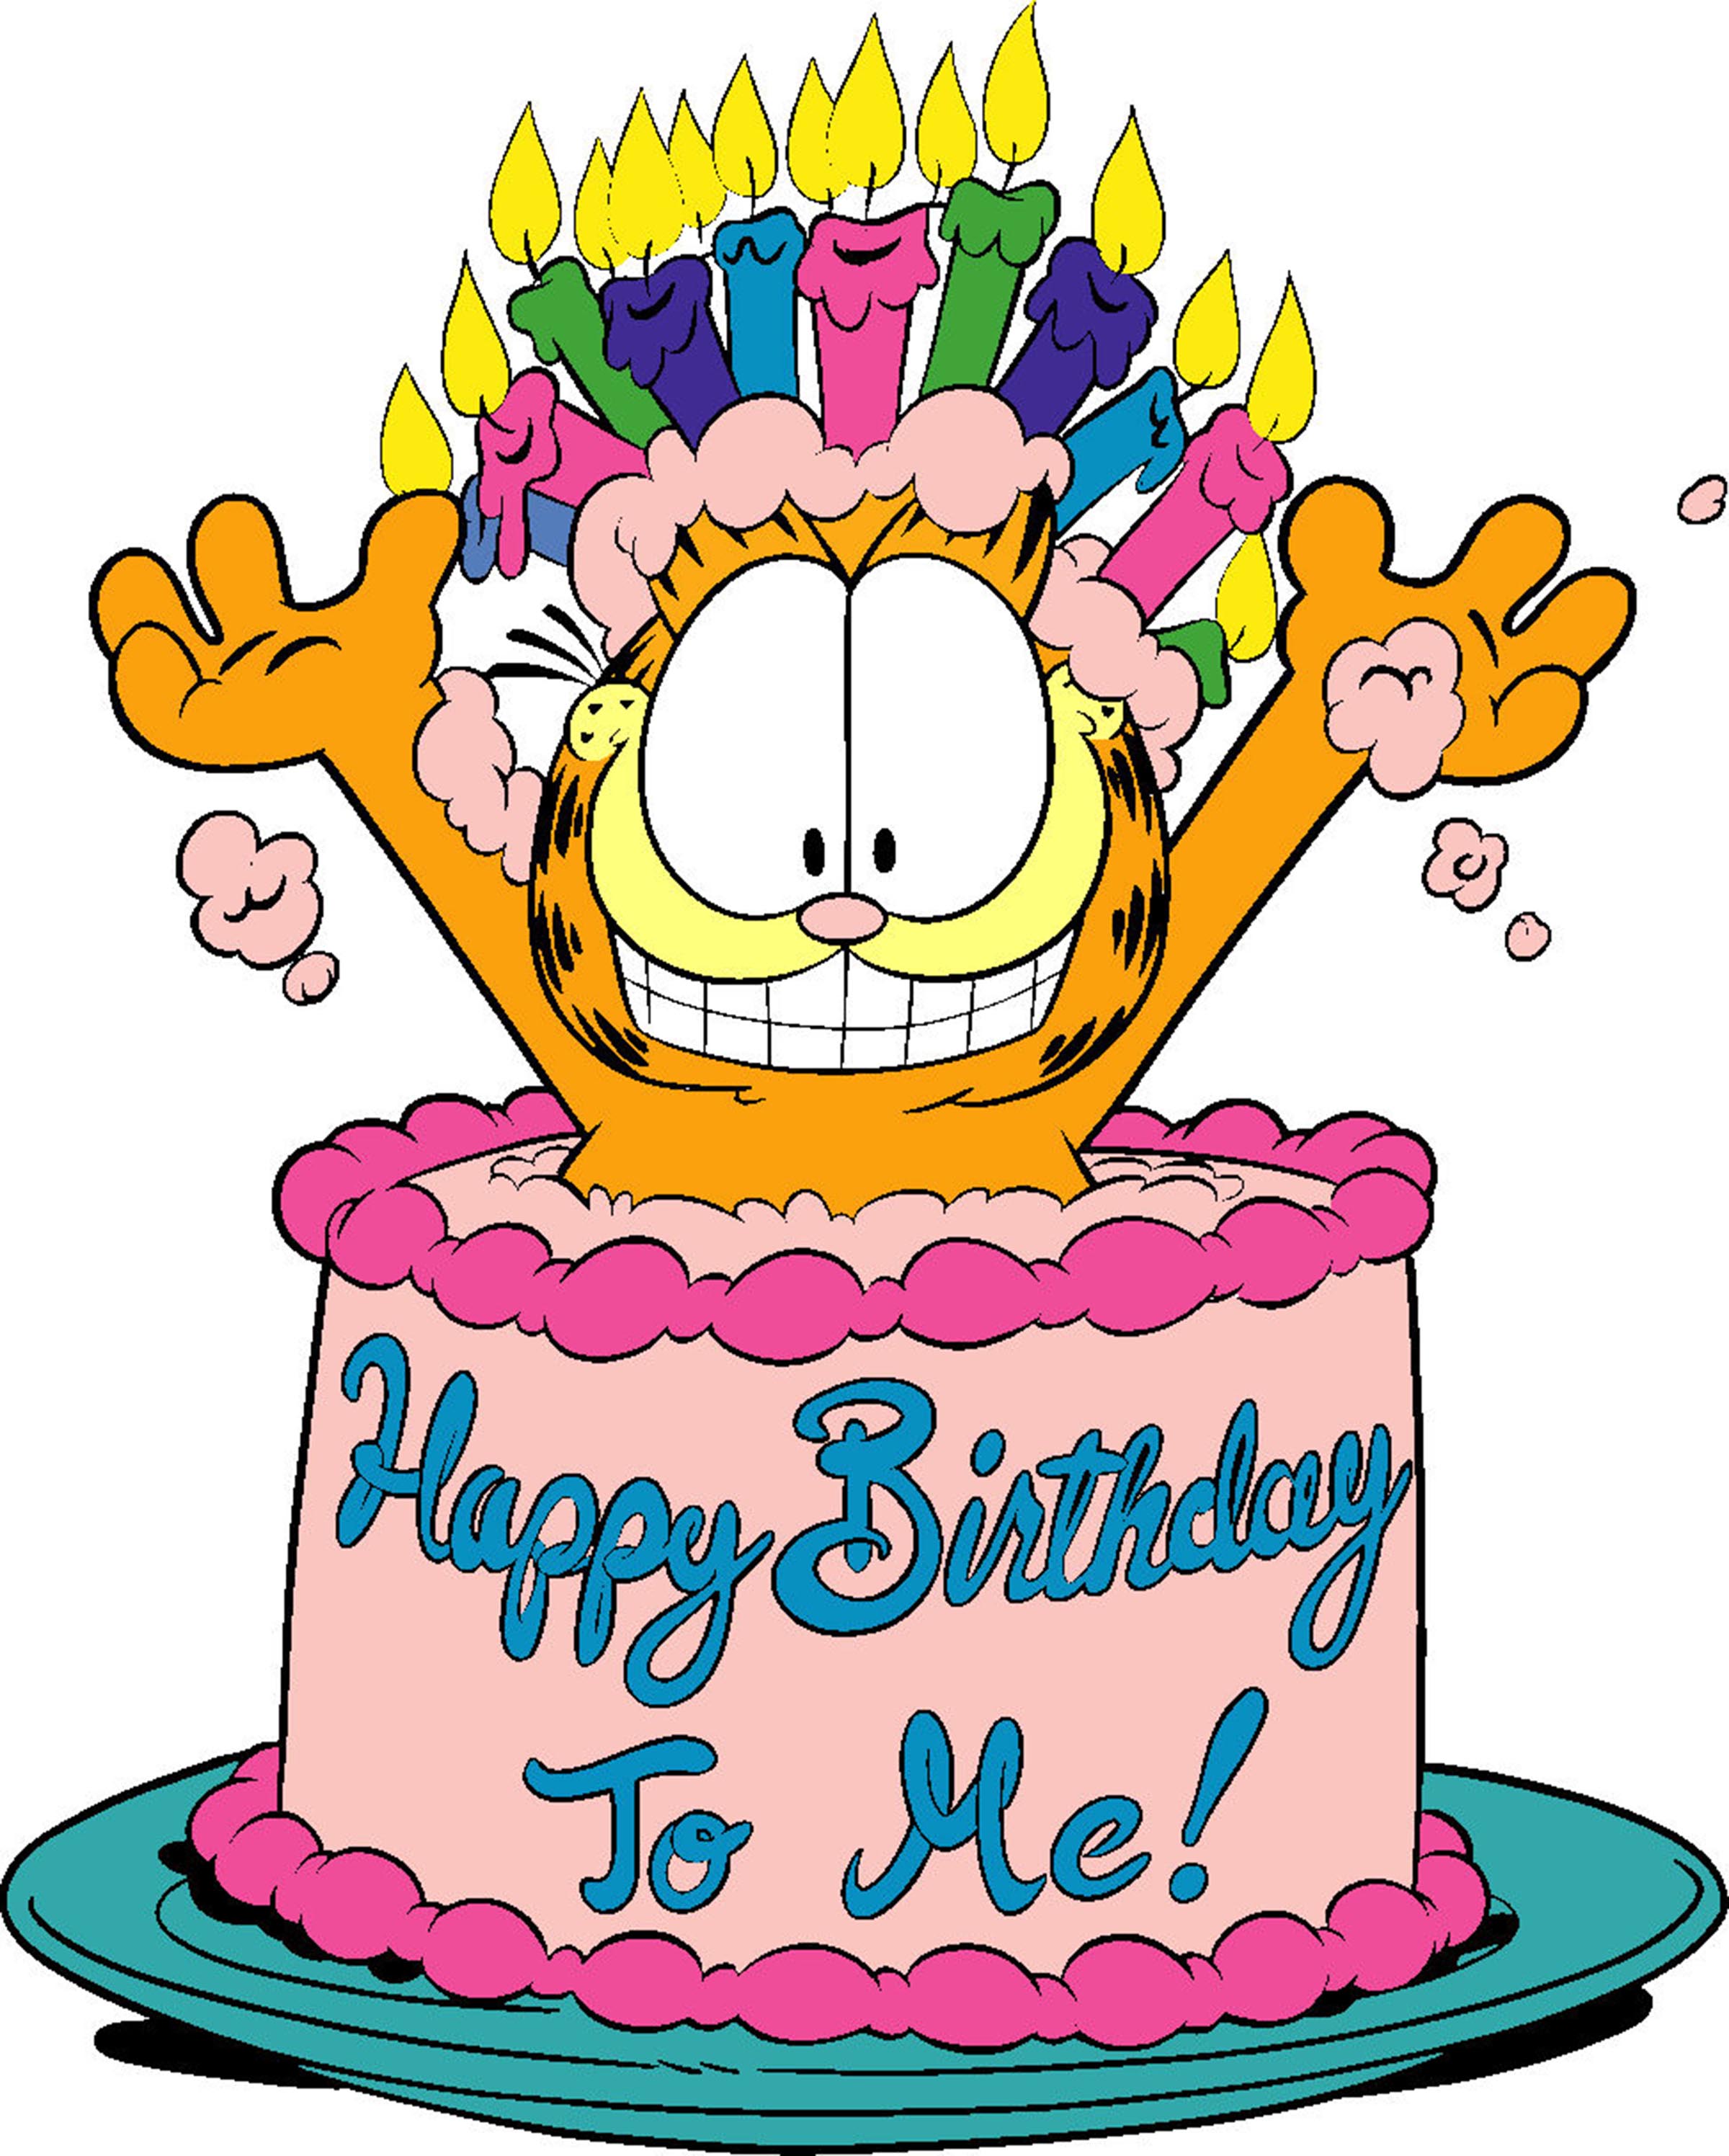 Garfield Happy Birtay Full HD Wallpaper For Phone